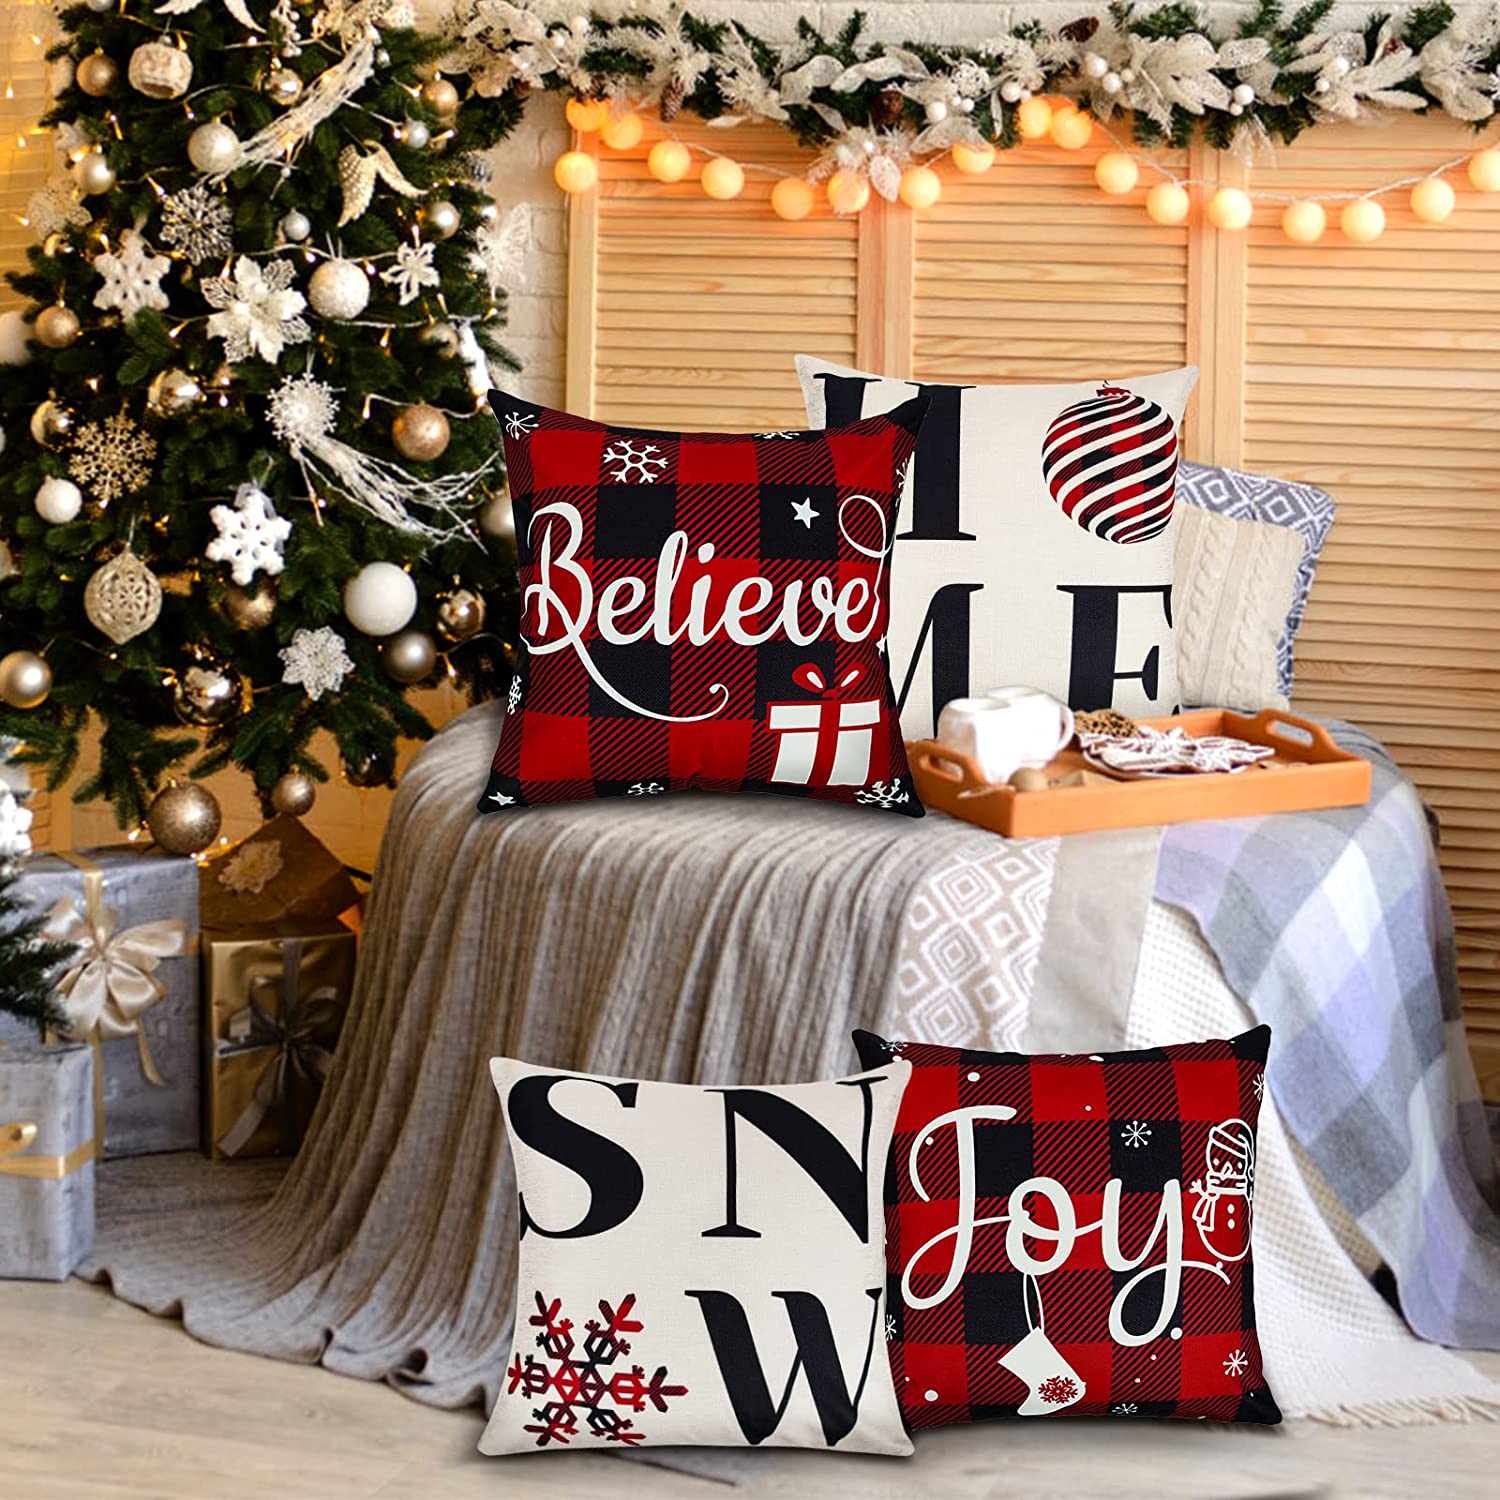 Ouddy Home Christmas Pillow Covers 18x18 Set of 4, Buffalo Plaid Christmas Throw Pillows Cases